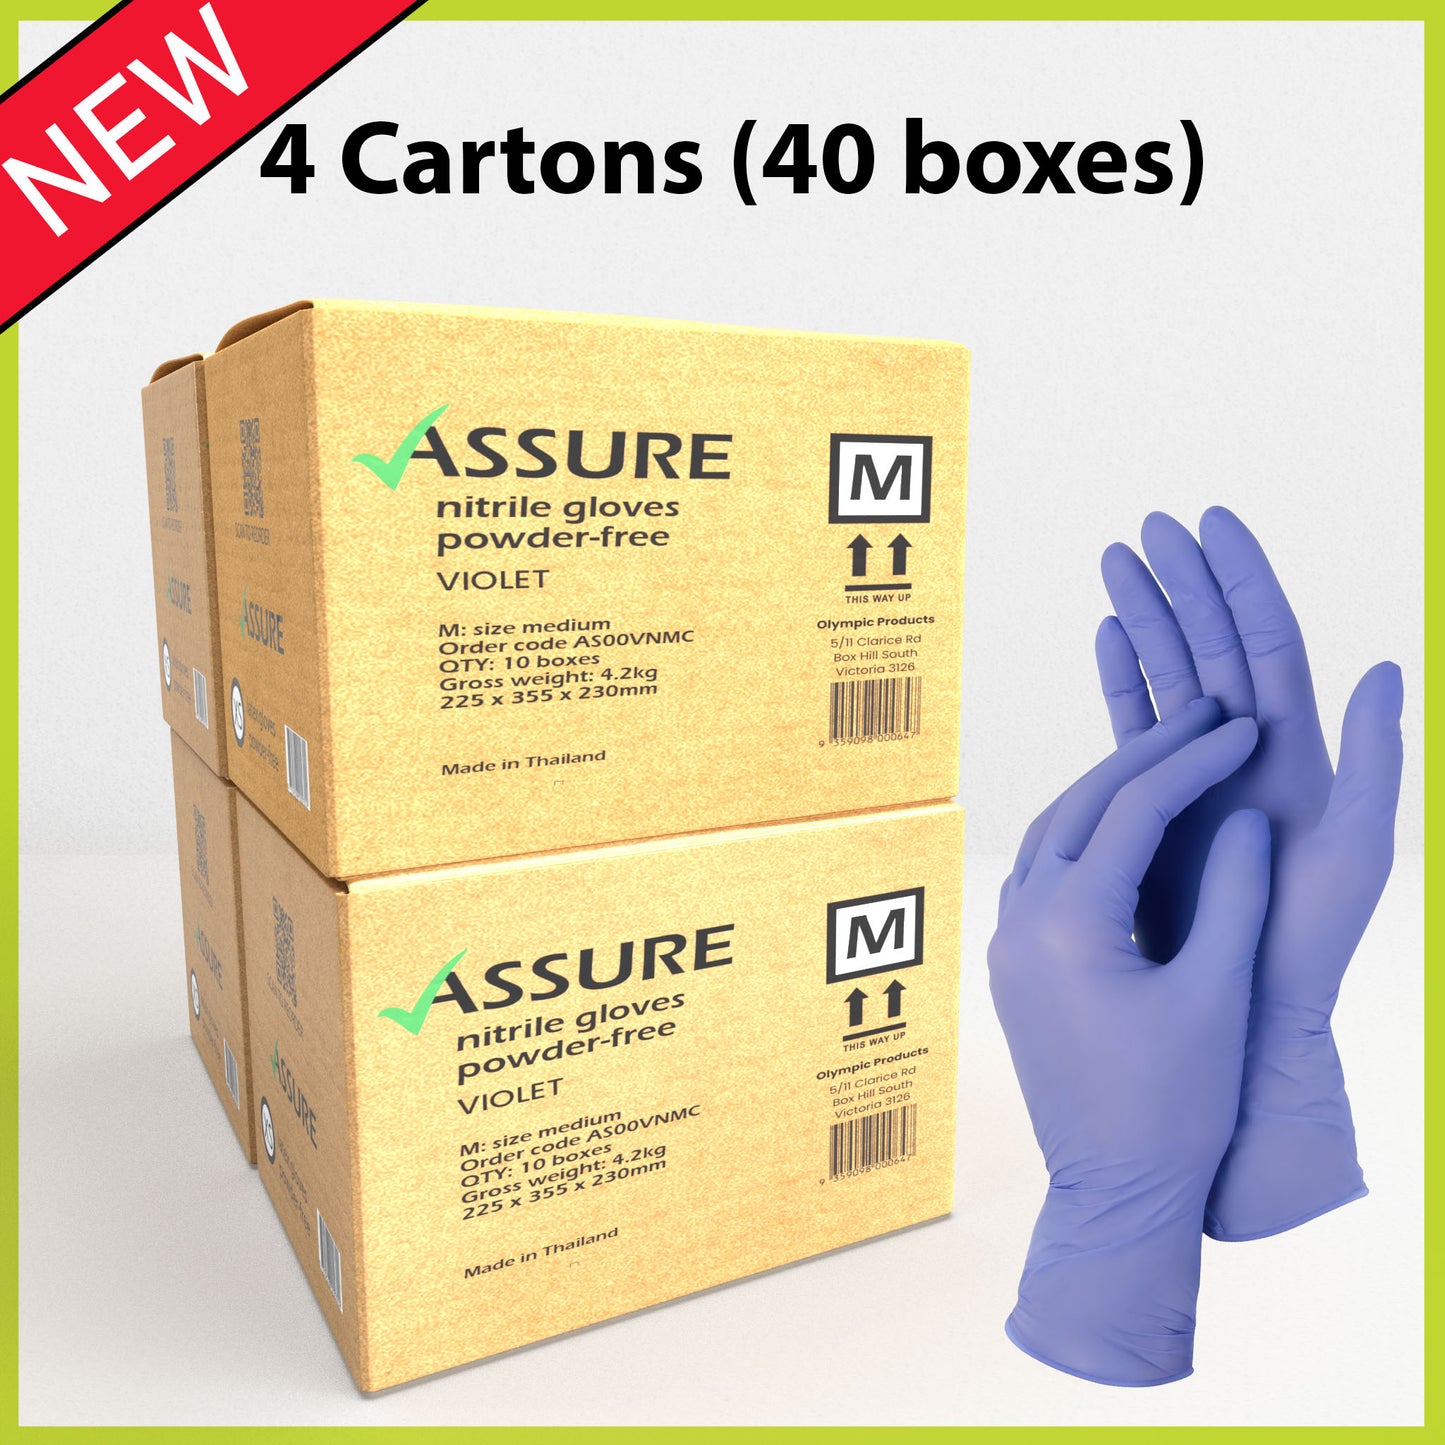 Bulk Saver - ASSURE Violet Nitrile Gloves, 4 cartons @ $5.50 per box